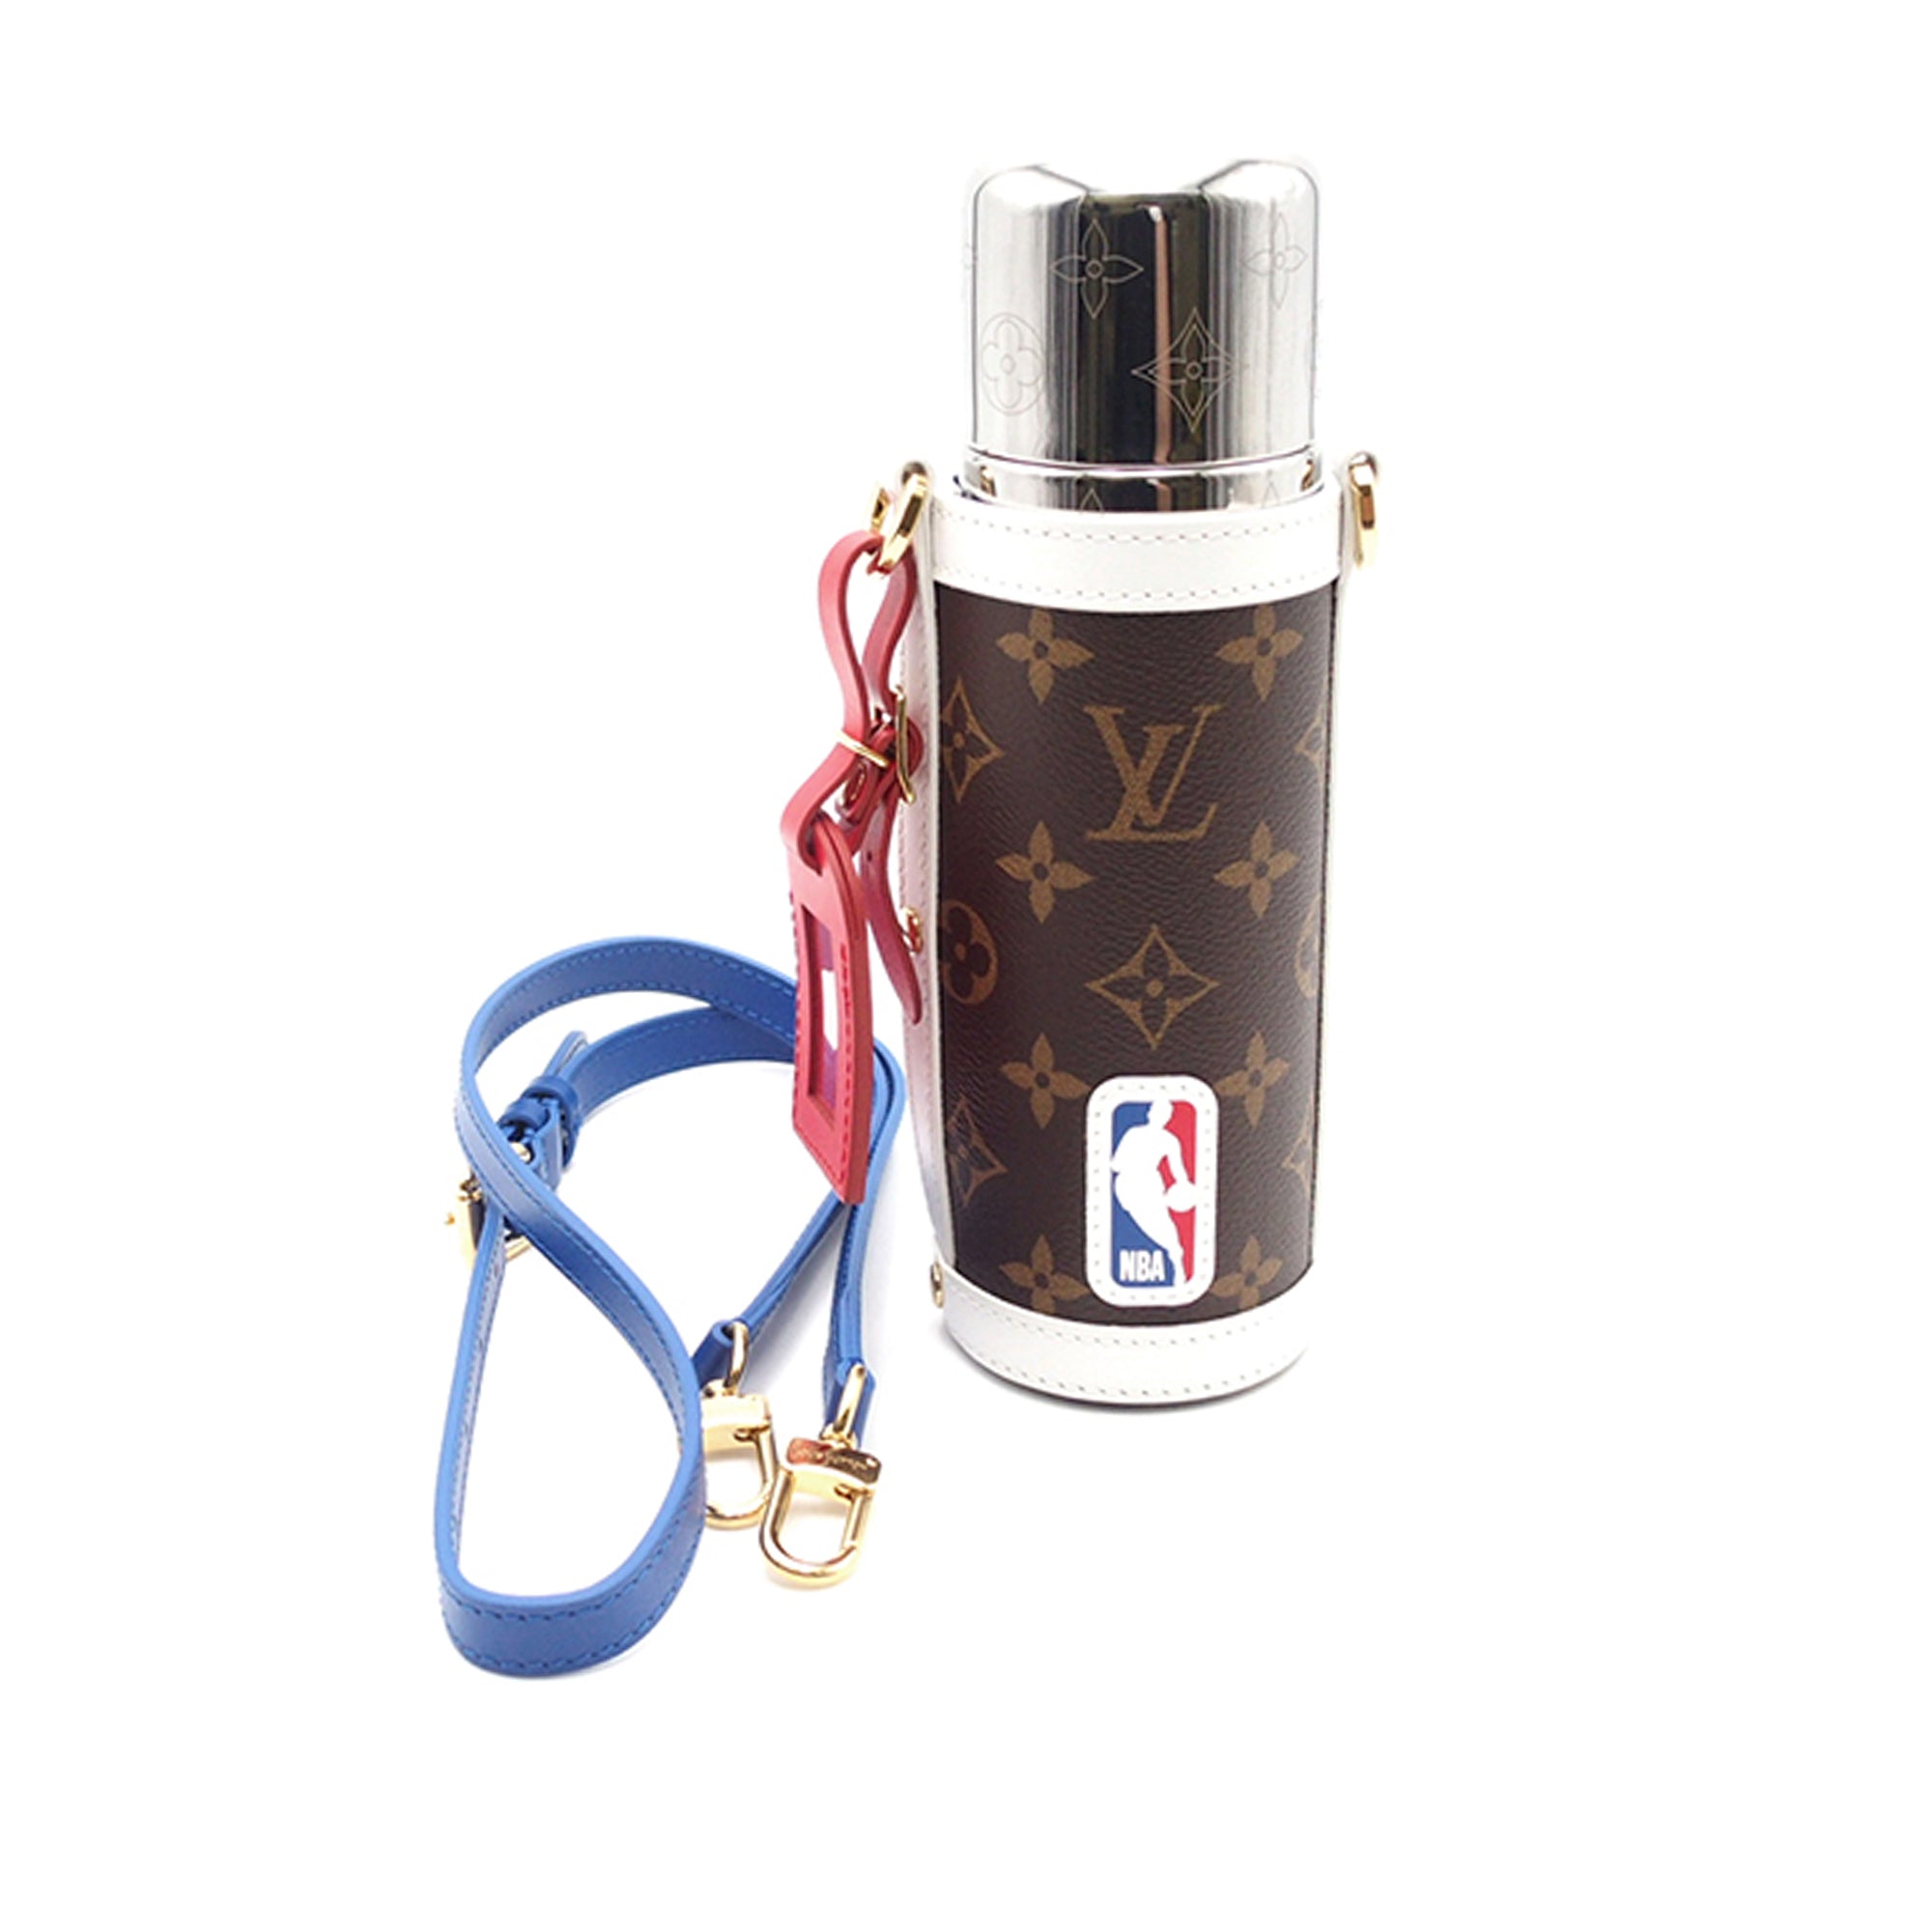 LV x NBA Monogram New Backpack w/ Tags